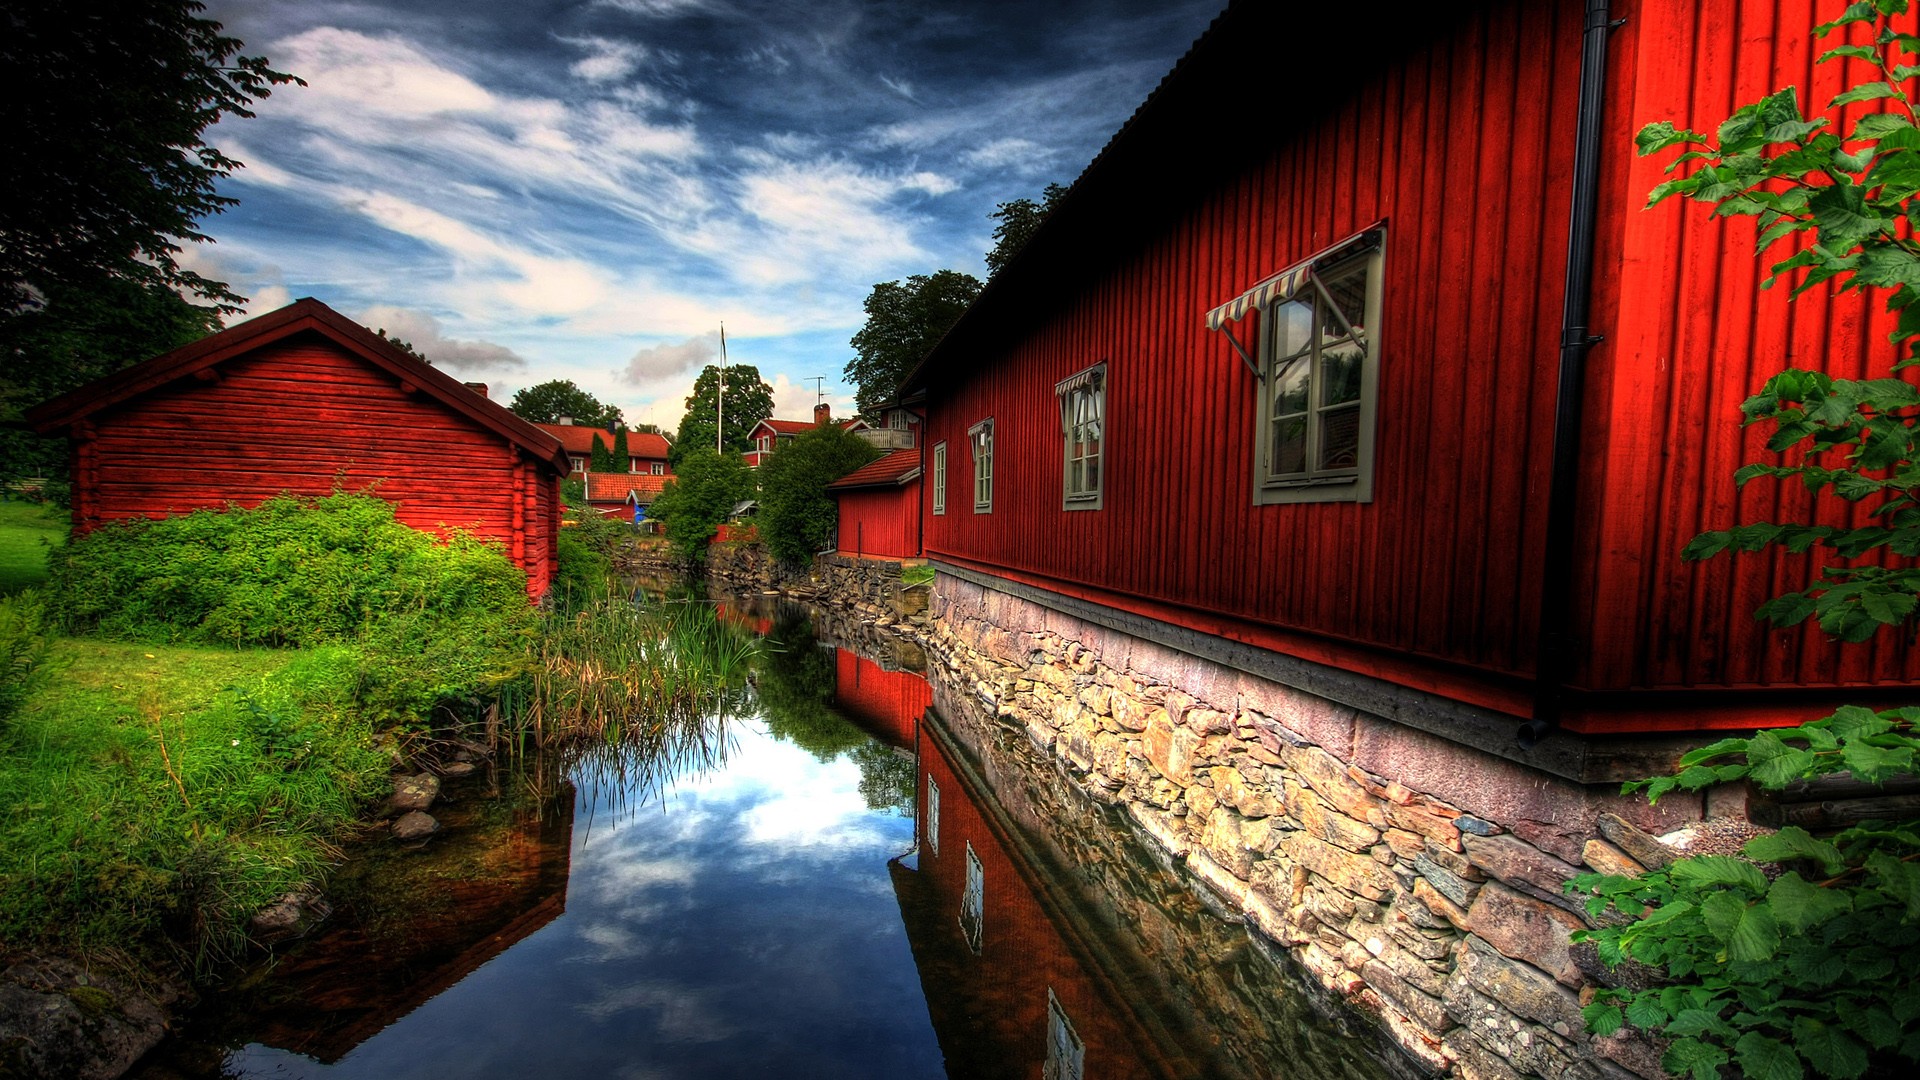 General 1920x1080 Sweden village wood house creeks reflection outdoors idyllic